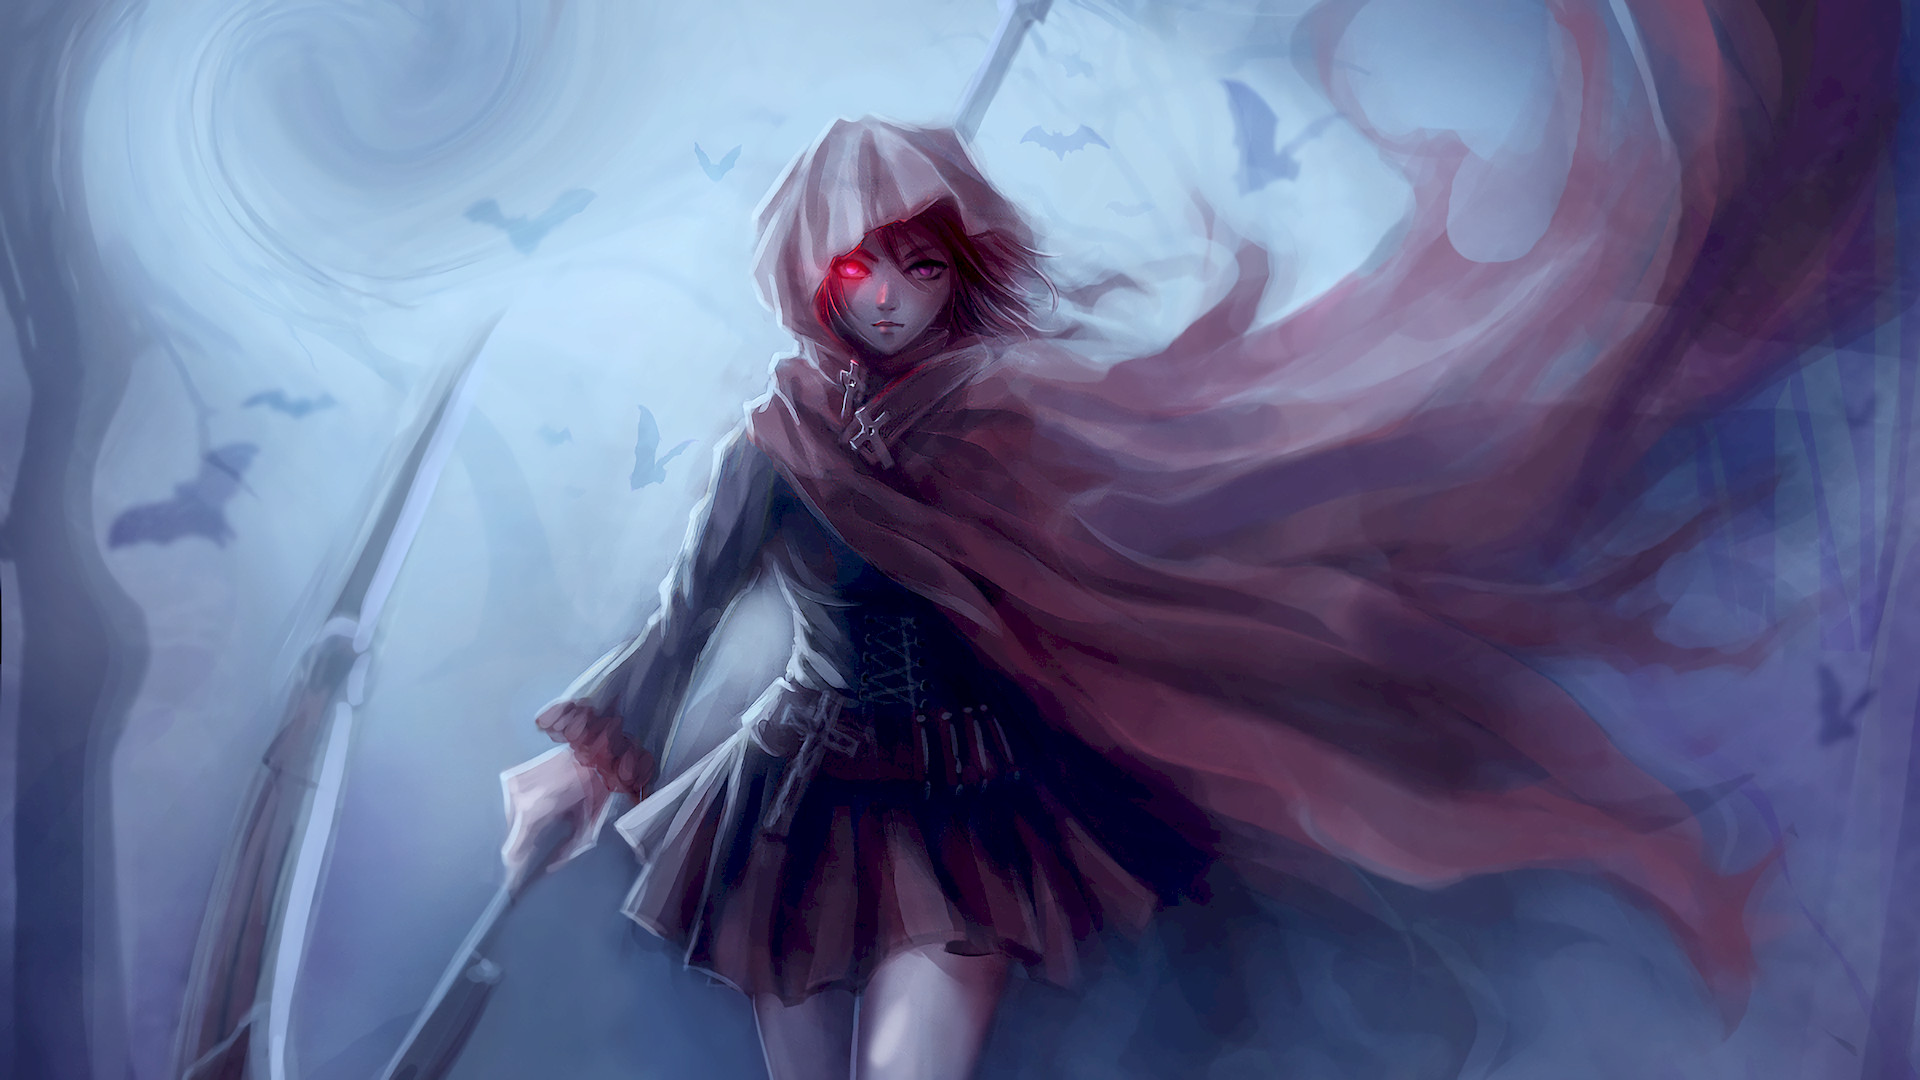 Anime â rwby ruby rose rwby fantasy woman girl anime warrior wallpaper